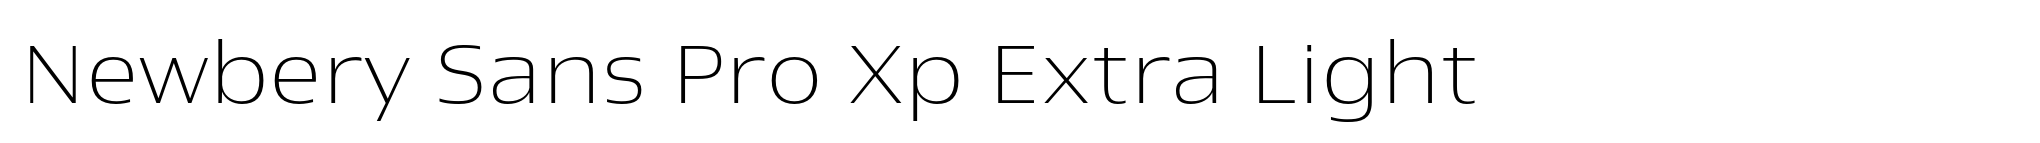 Newbery Sans Pro Xp Extra Light image